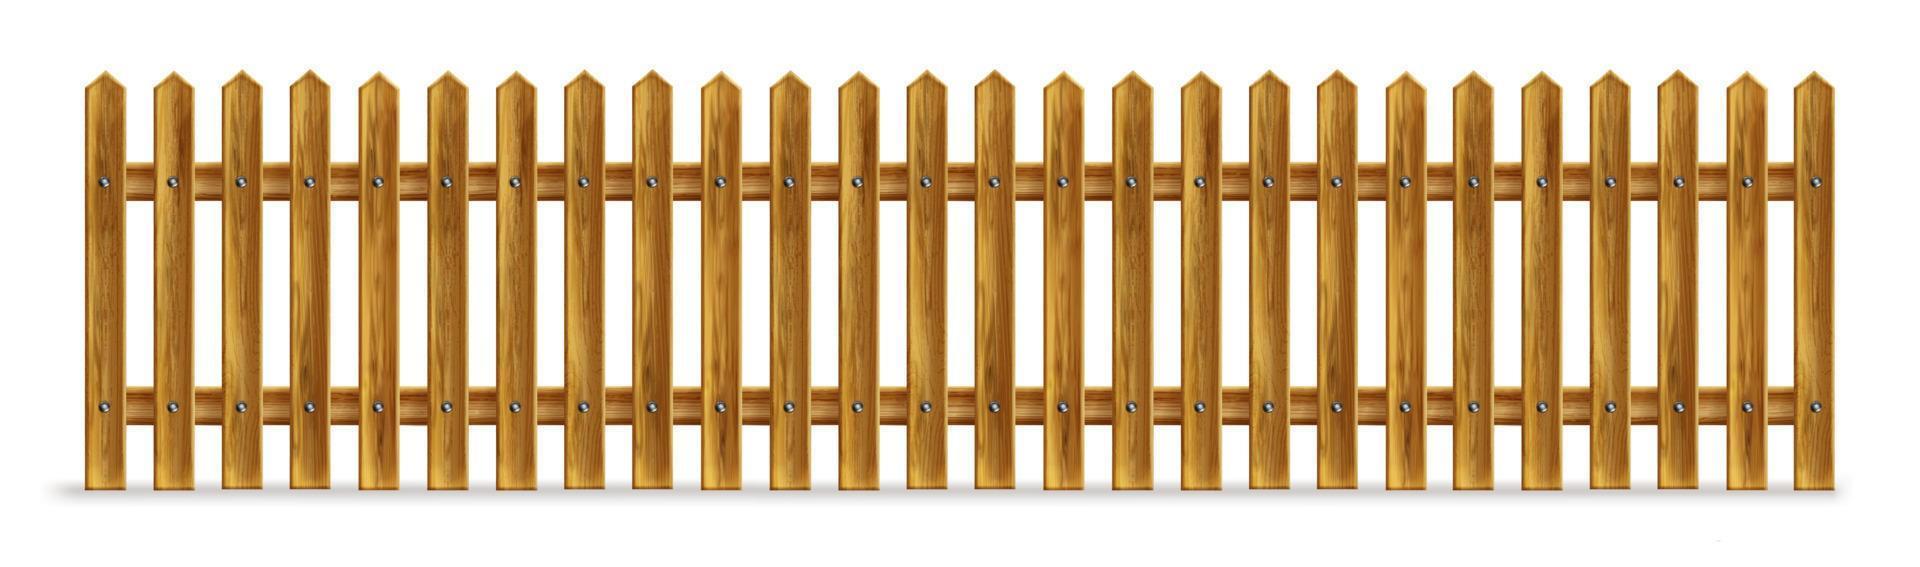 Wooden fence, palisade, stockade or balustrade vector